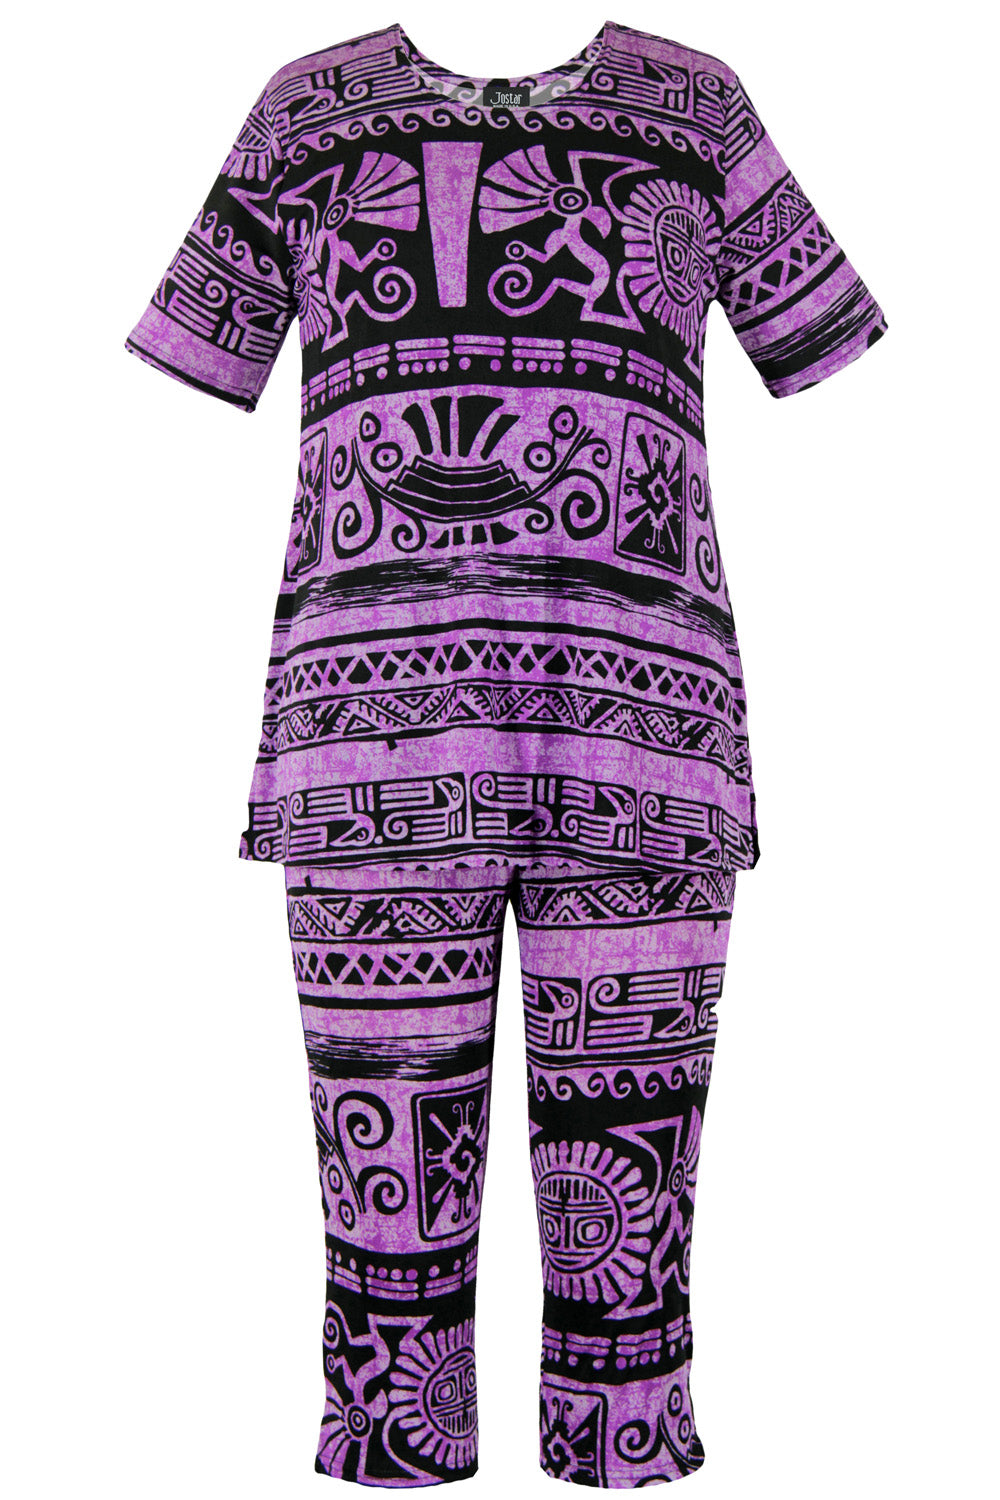 Jostar Women's Stretchy Capri Pants Set Short Sleeve Plus Print, 903BN-SXP-W901 - Jostar Online